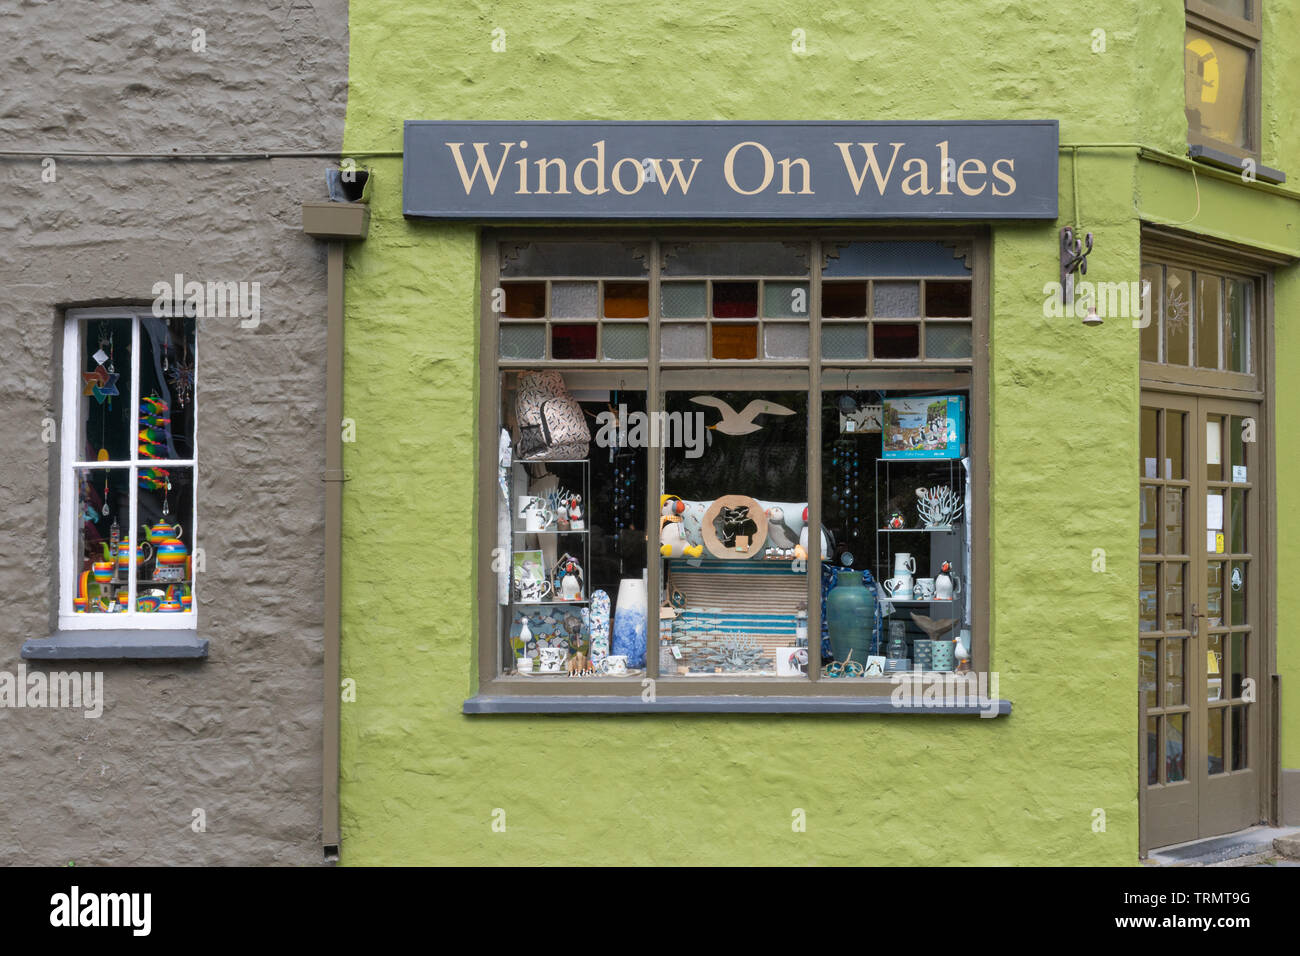 Bunt bemalten Geschenk Shop in Solva, Pembrokeshire, Wales. Fenster auf Wales speichern. Stockfoto